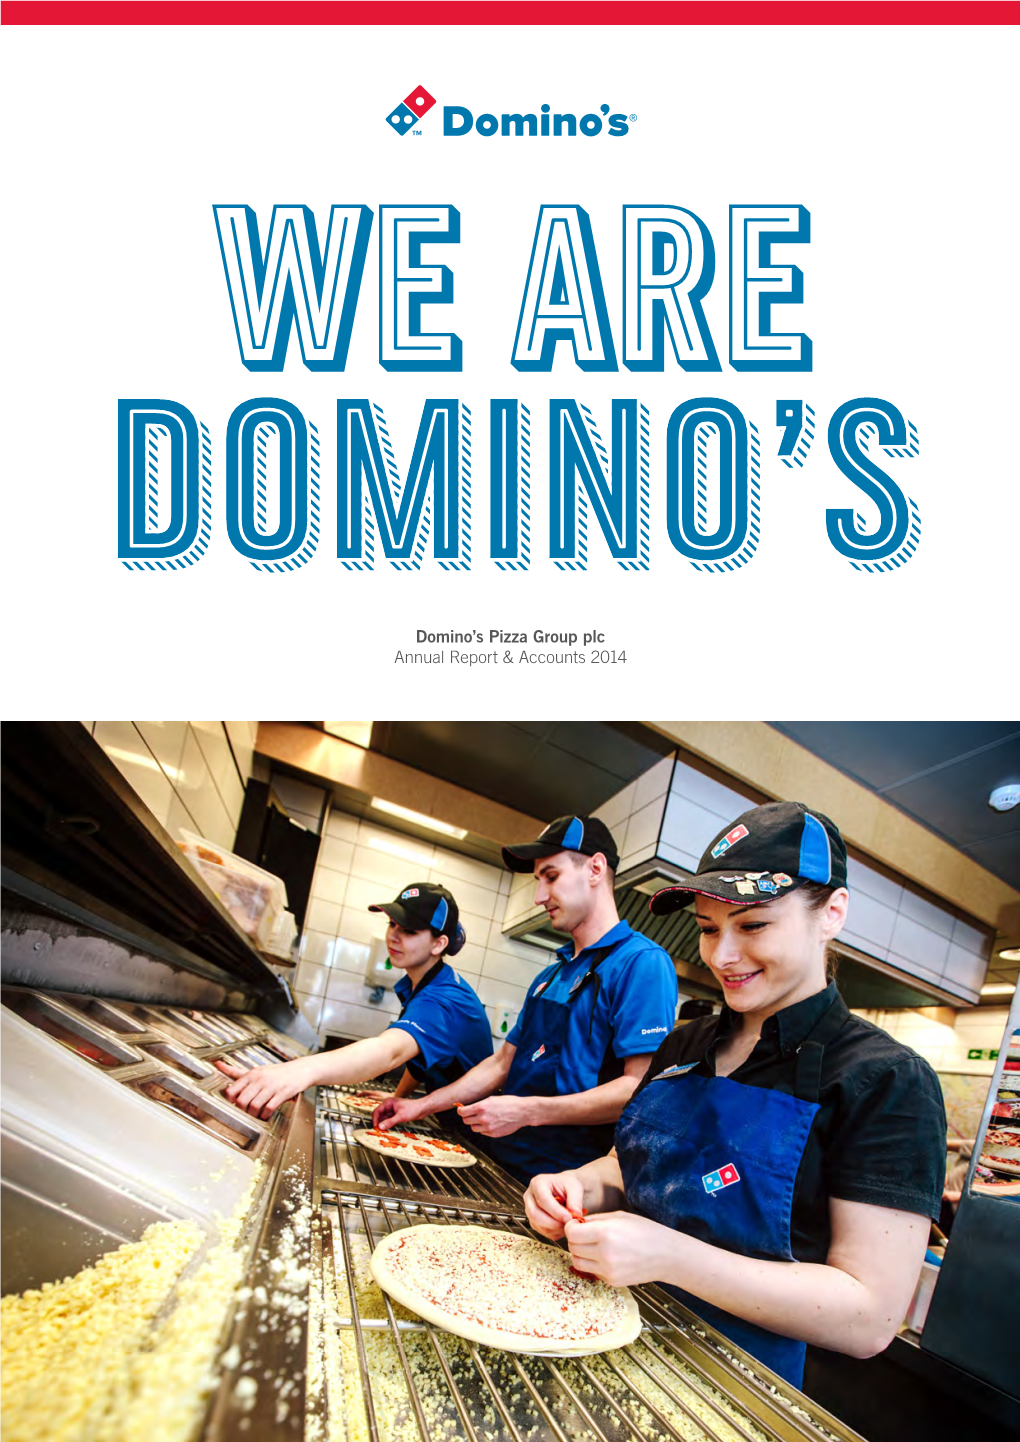 Domino's Pizza Group Plc Annual Report & Accounts 2014